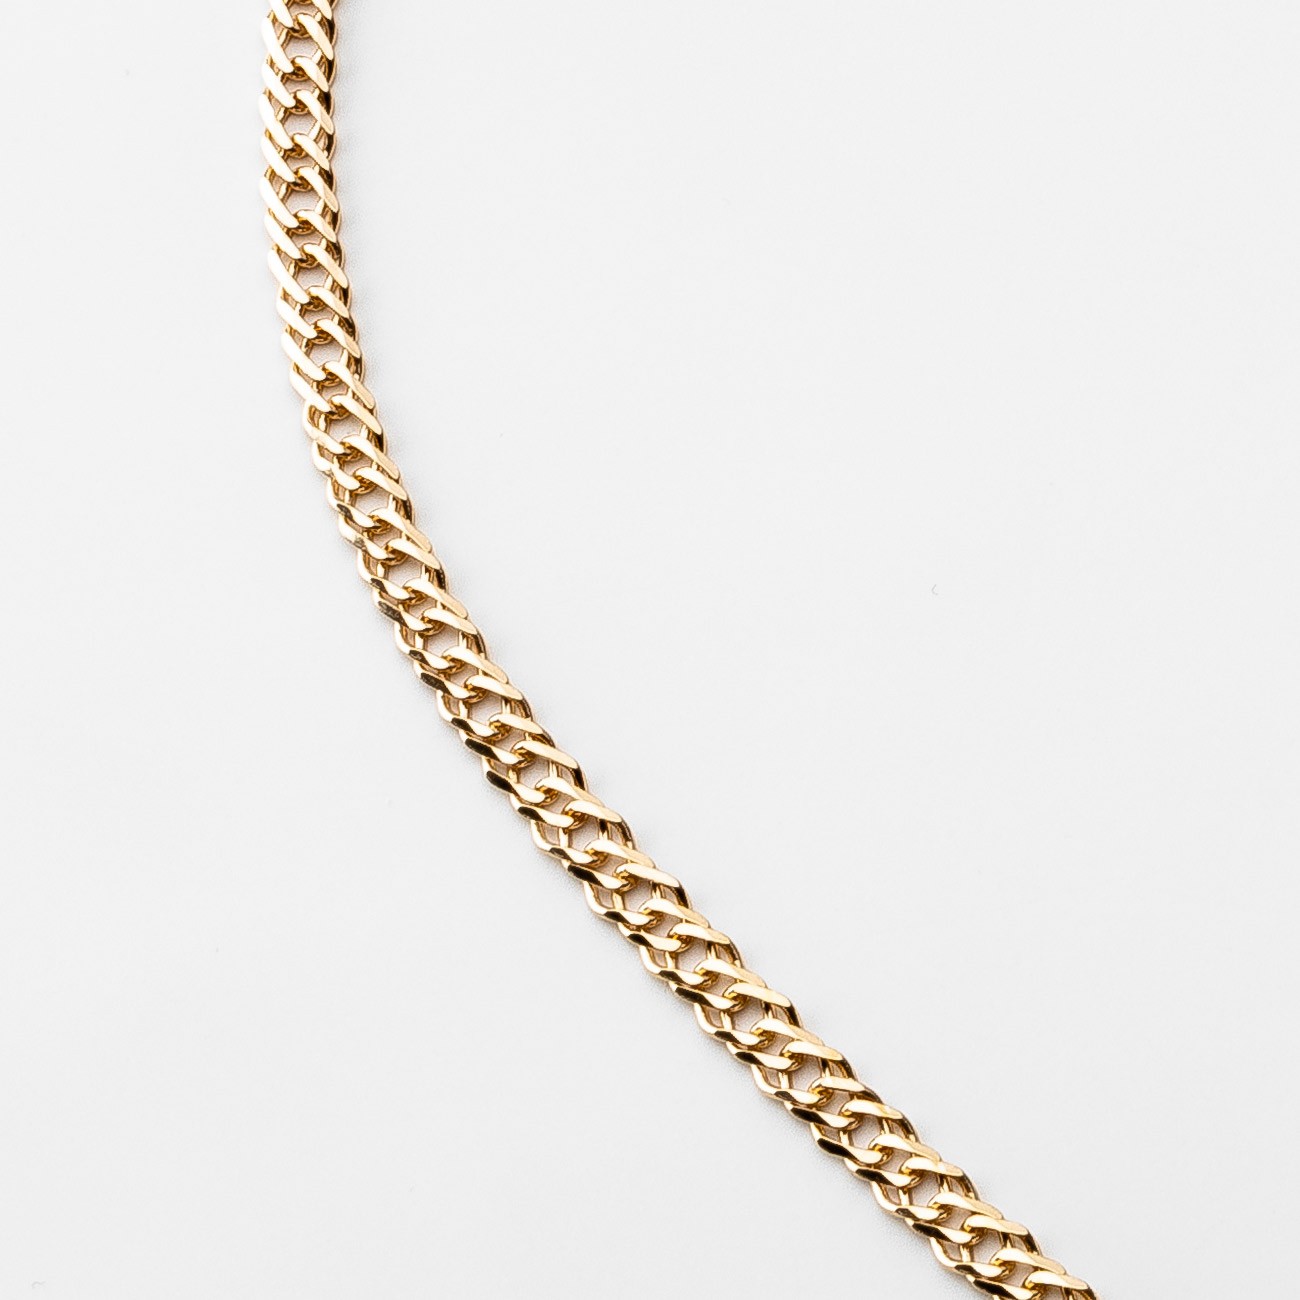 Rectangle pendant necklace rombo chain 925